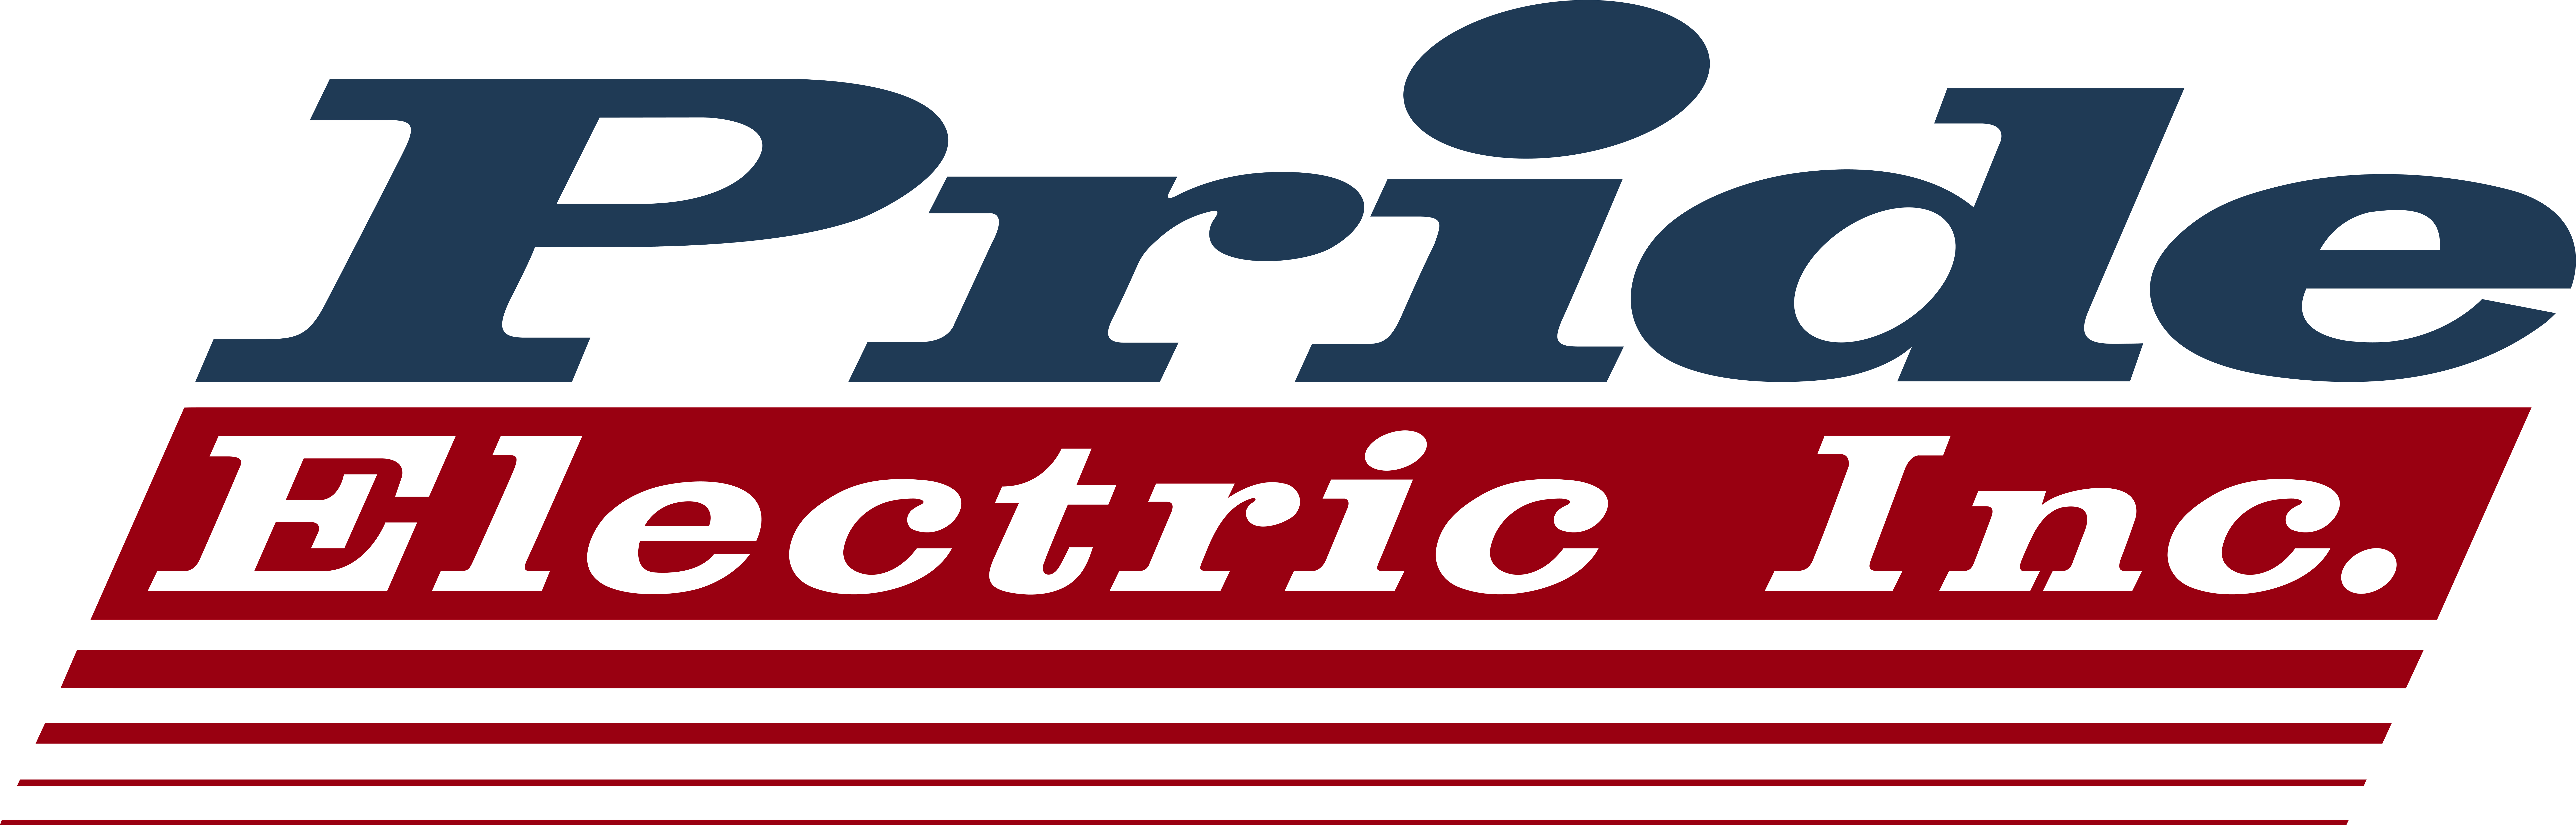 Pride Electric logo